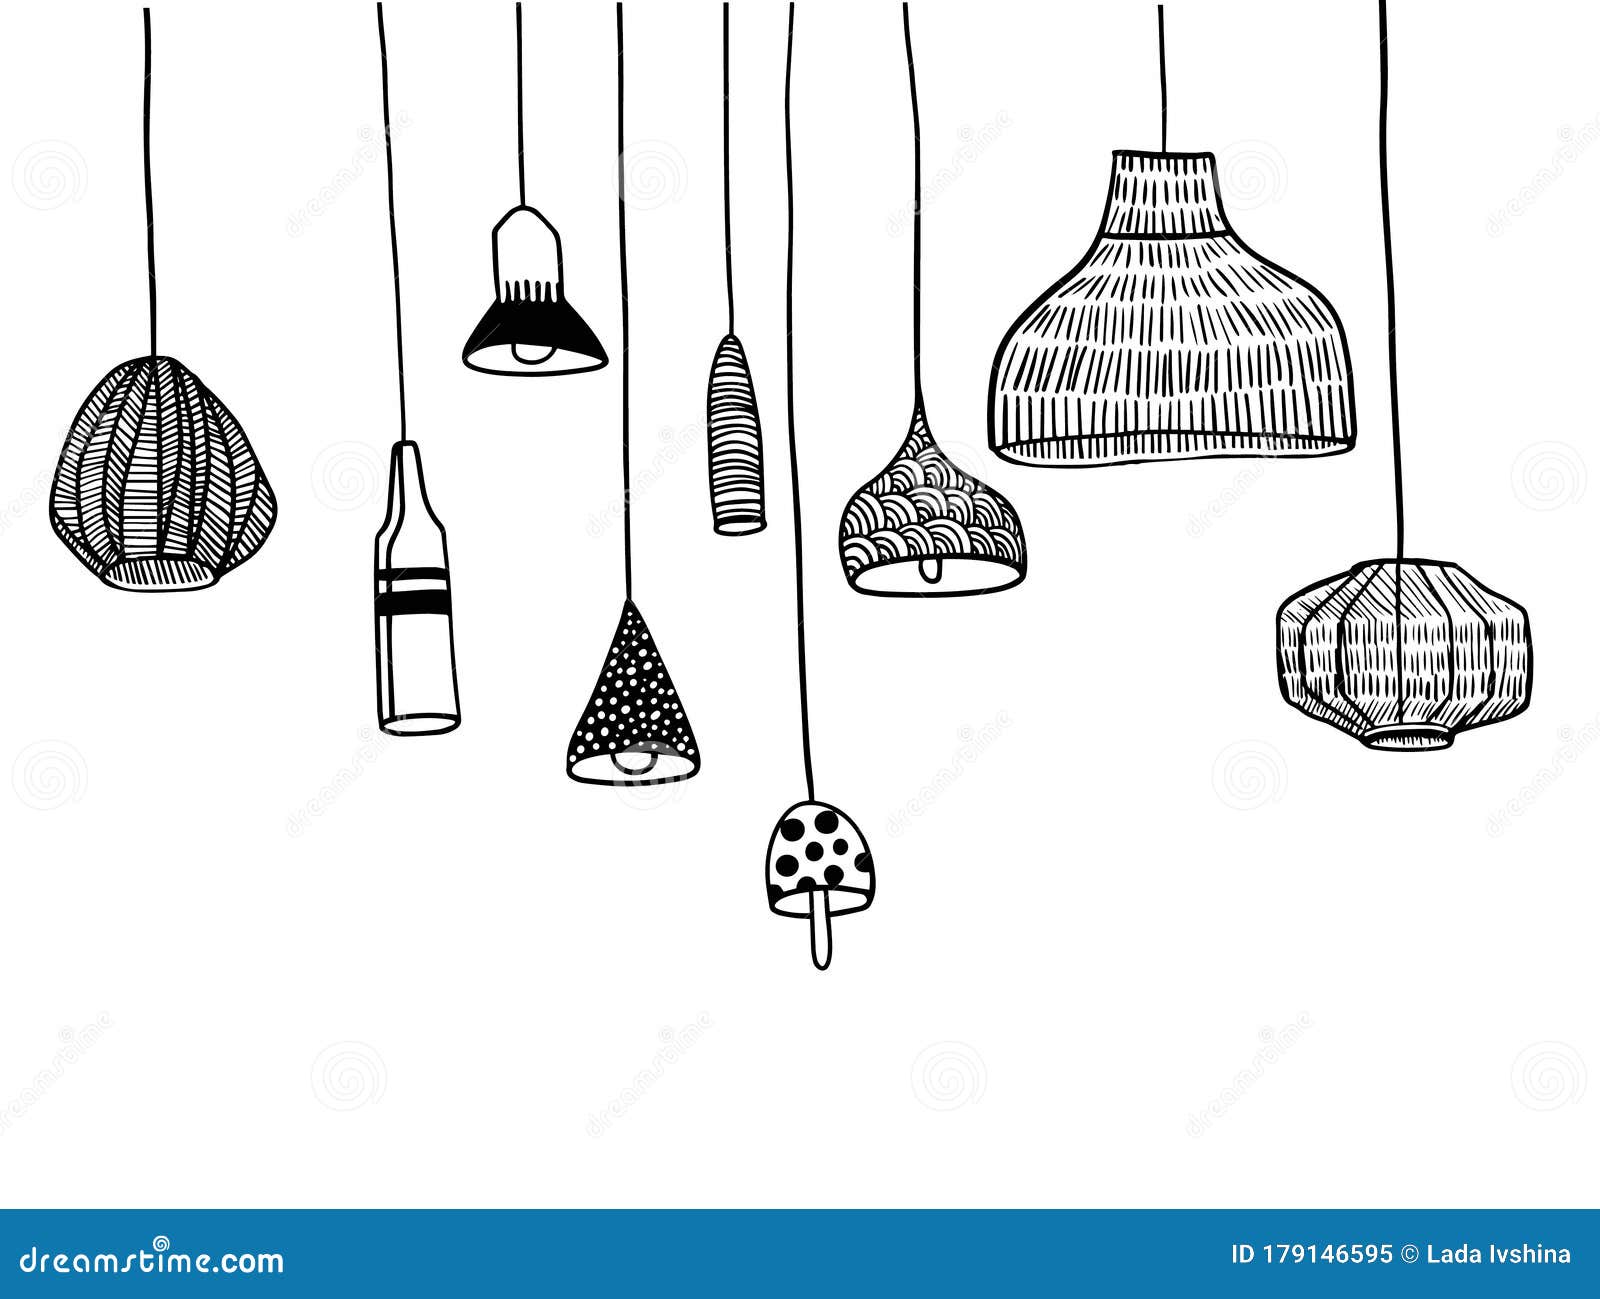  cartoon set of varios chandeliers